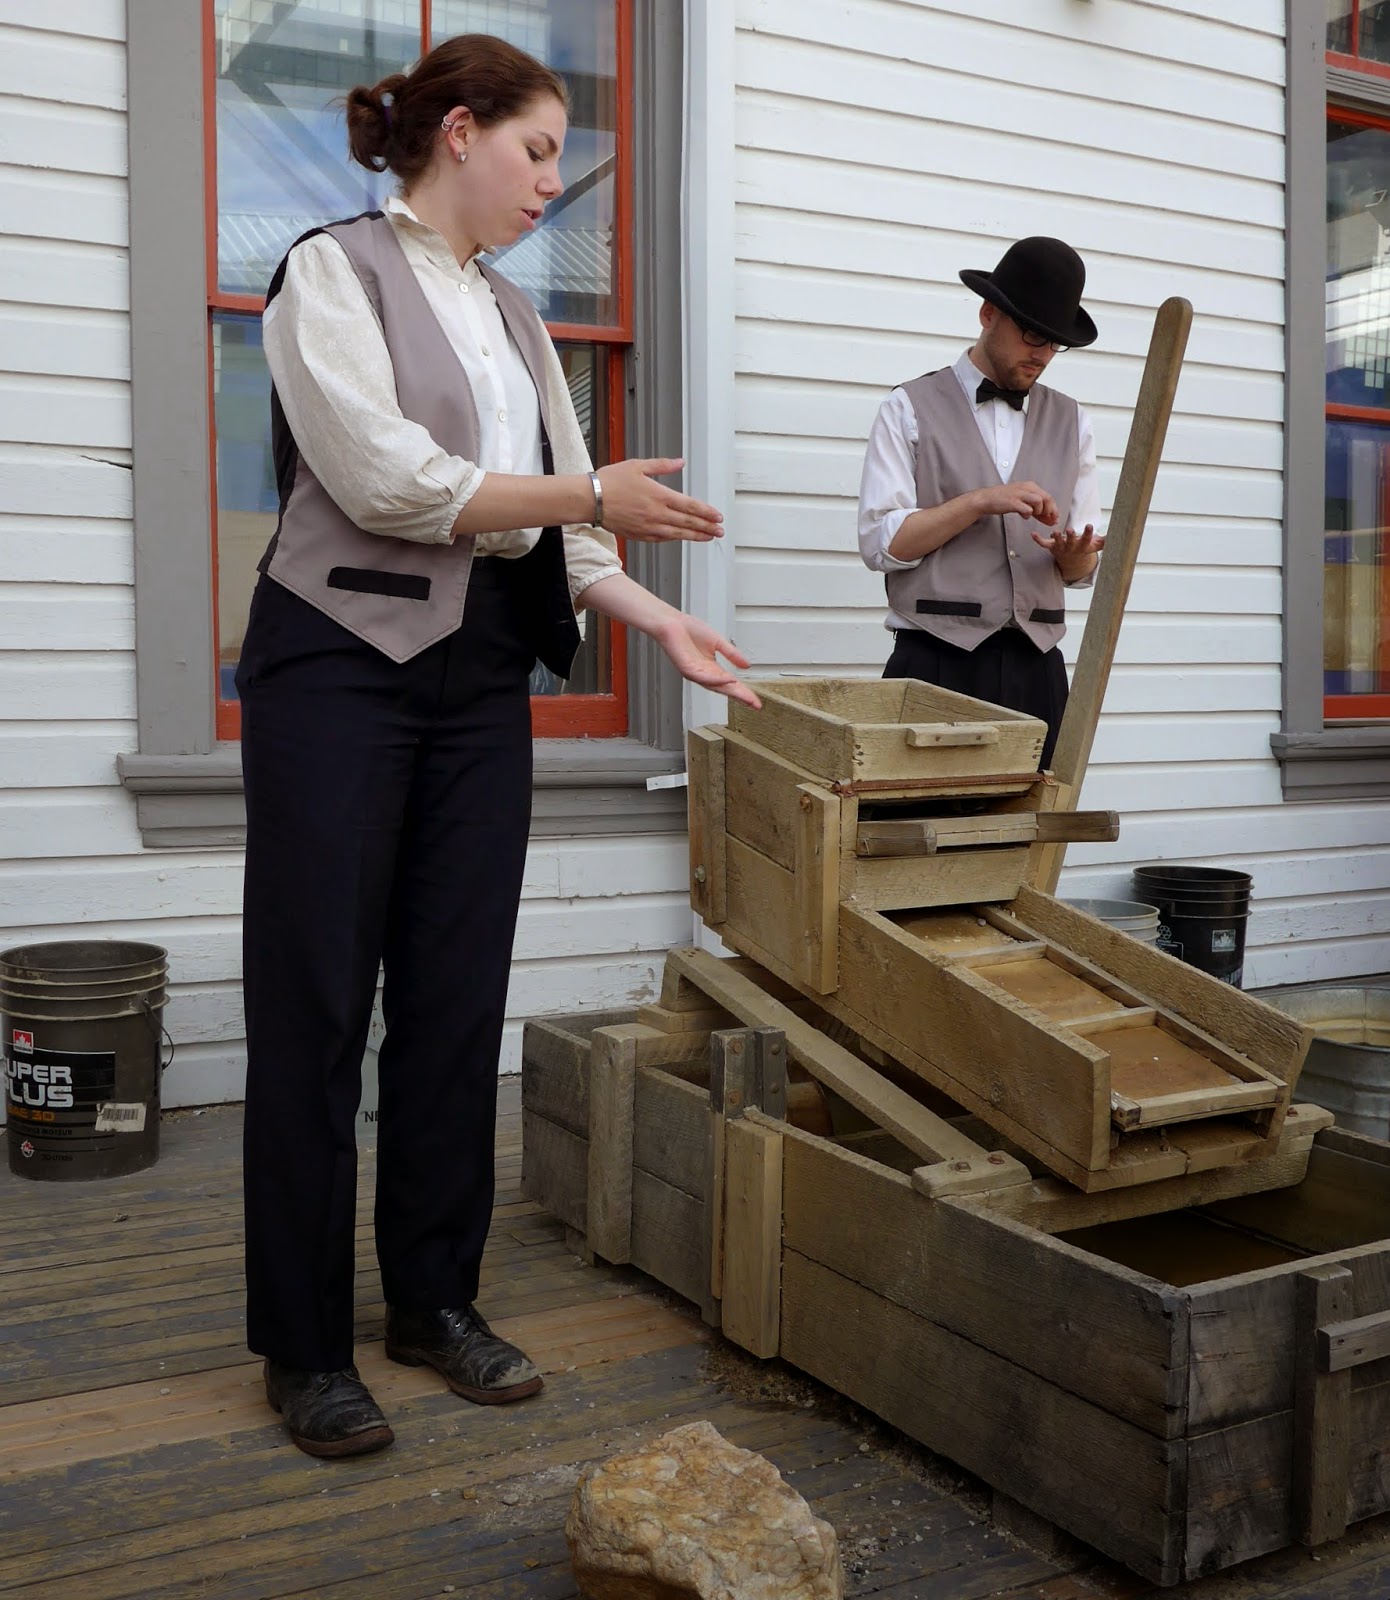 Sluice box demonstration at the Dawson City Museum.